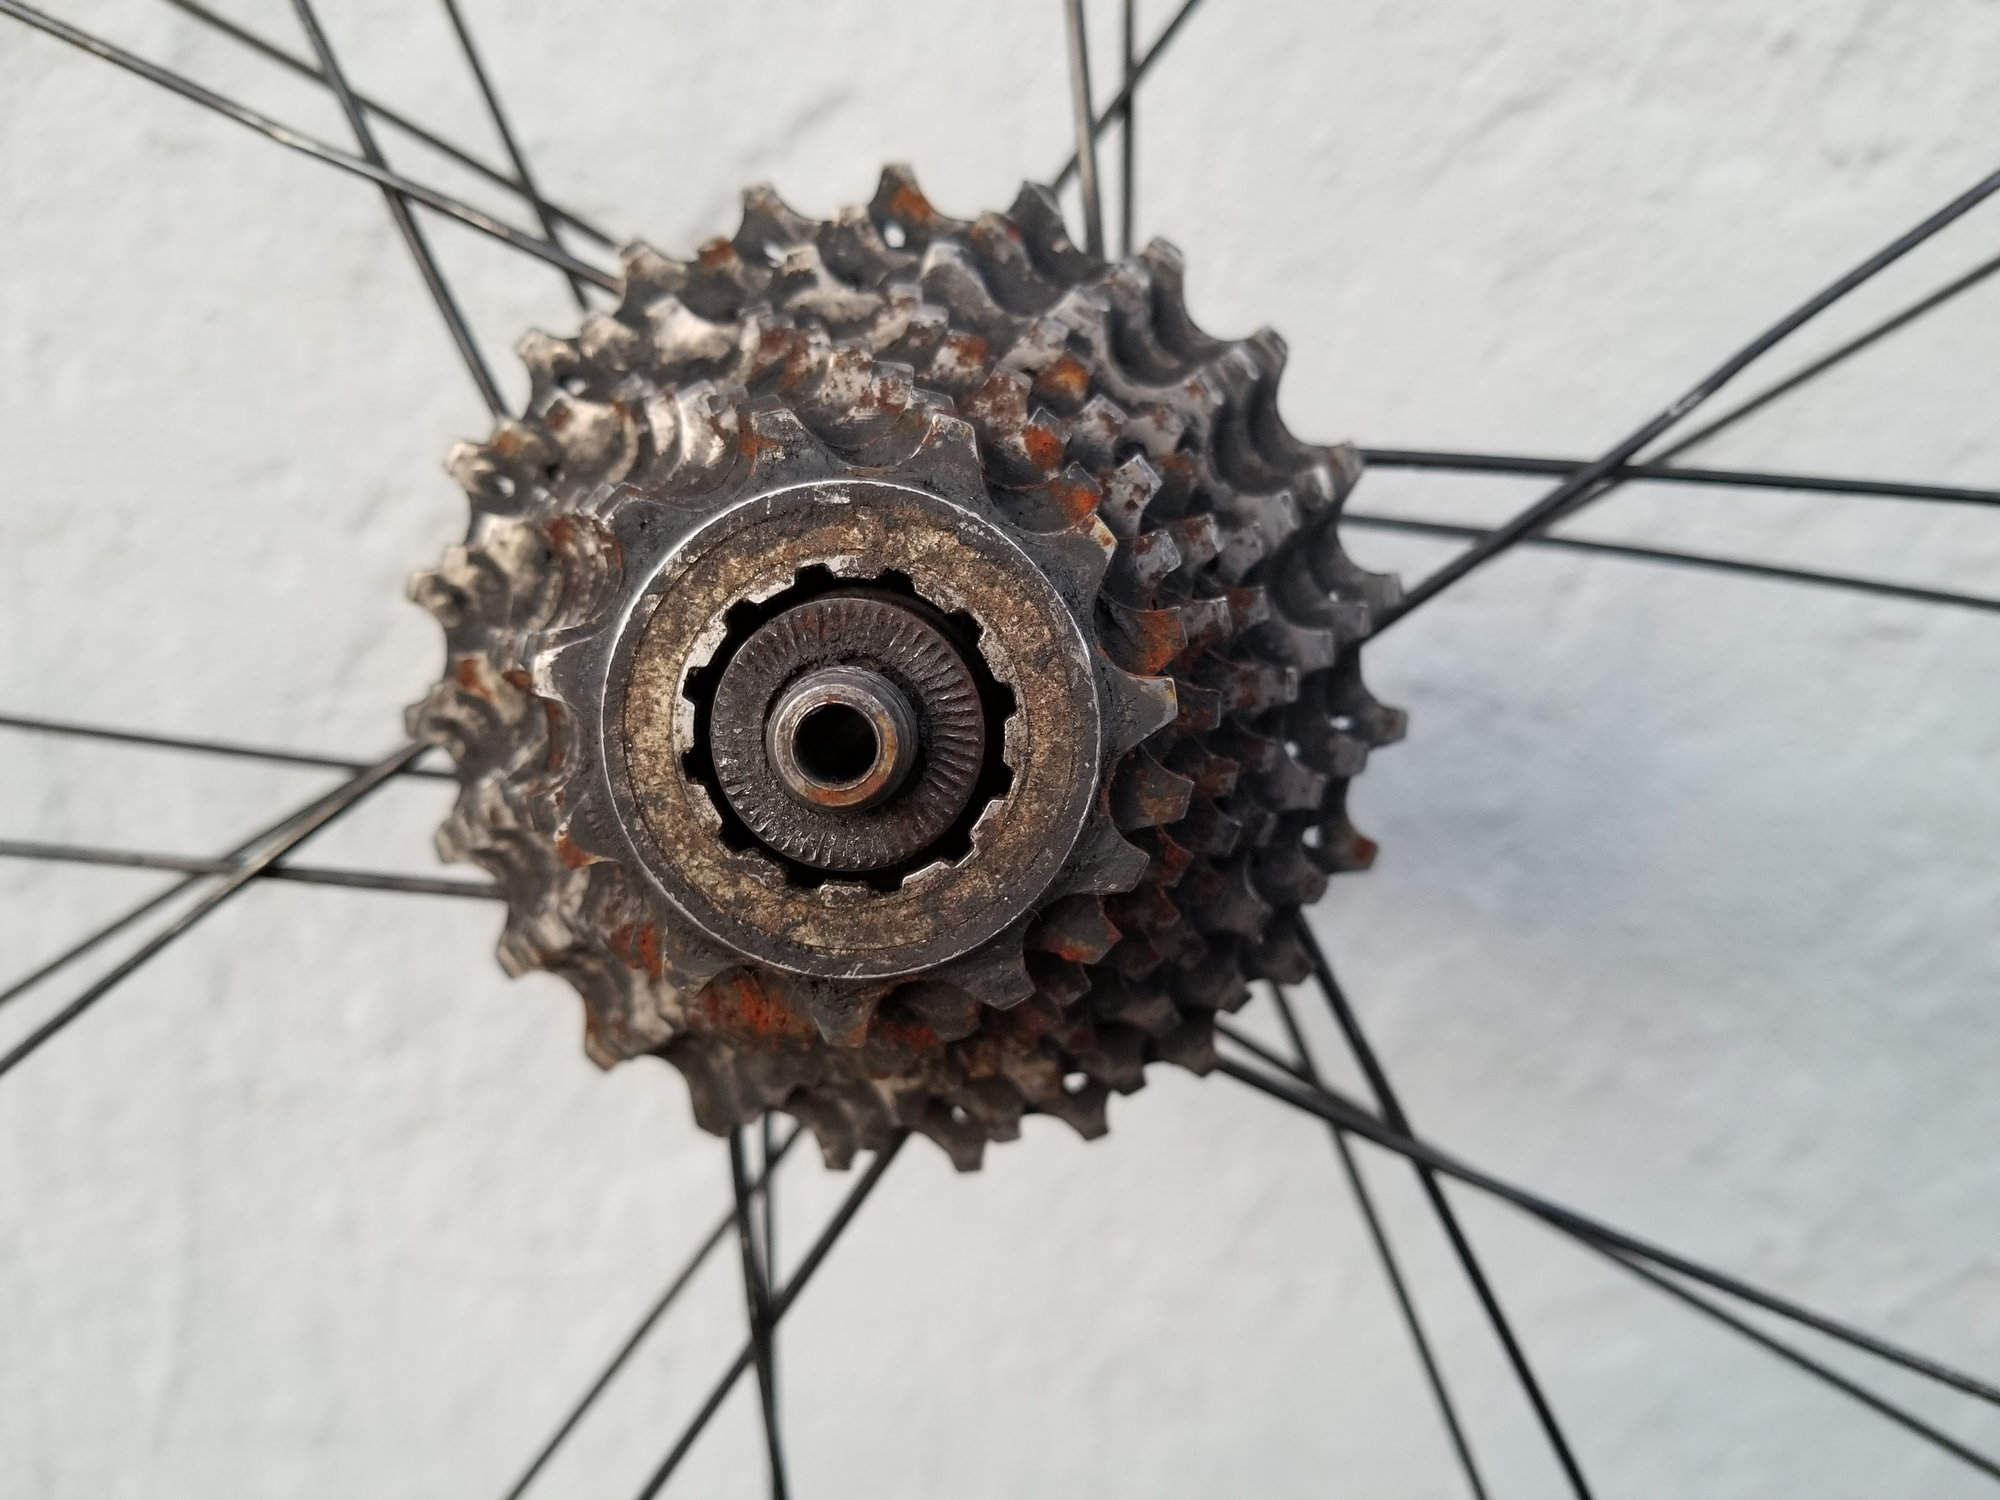 removing bike freewheel